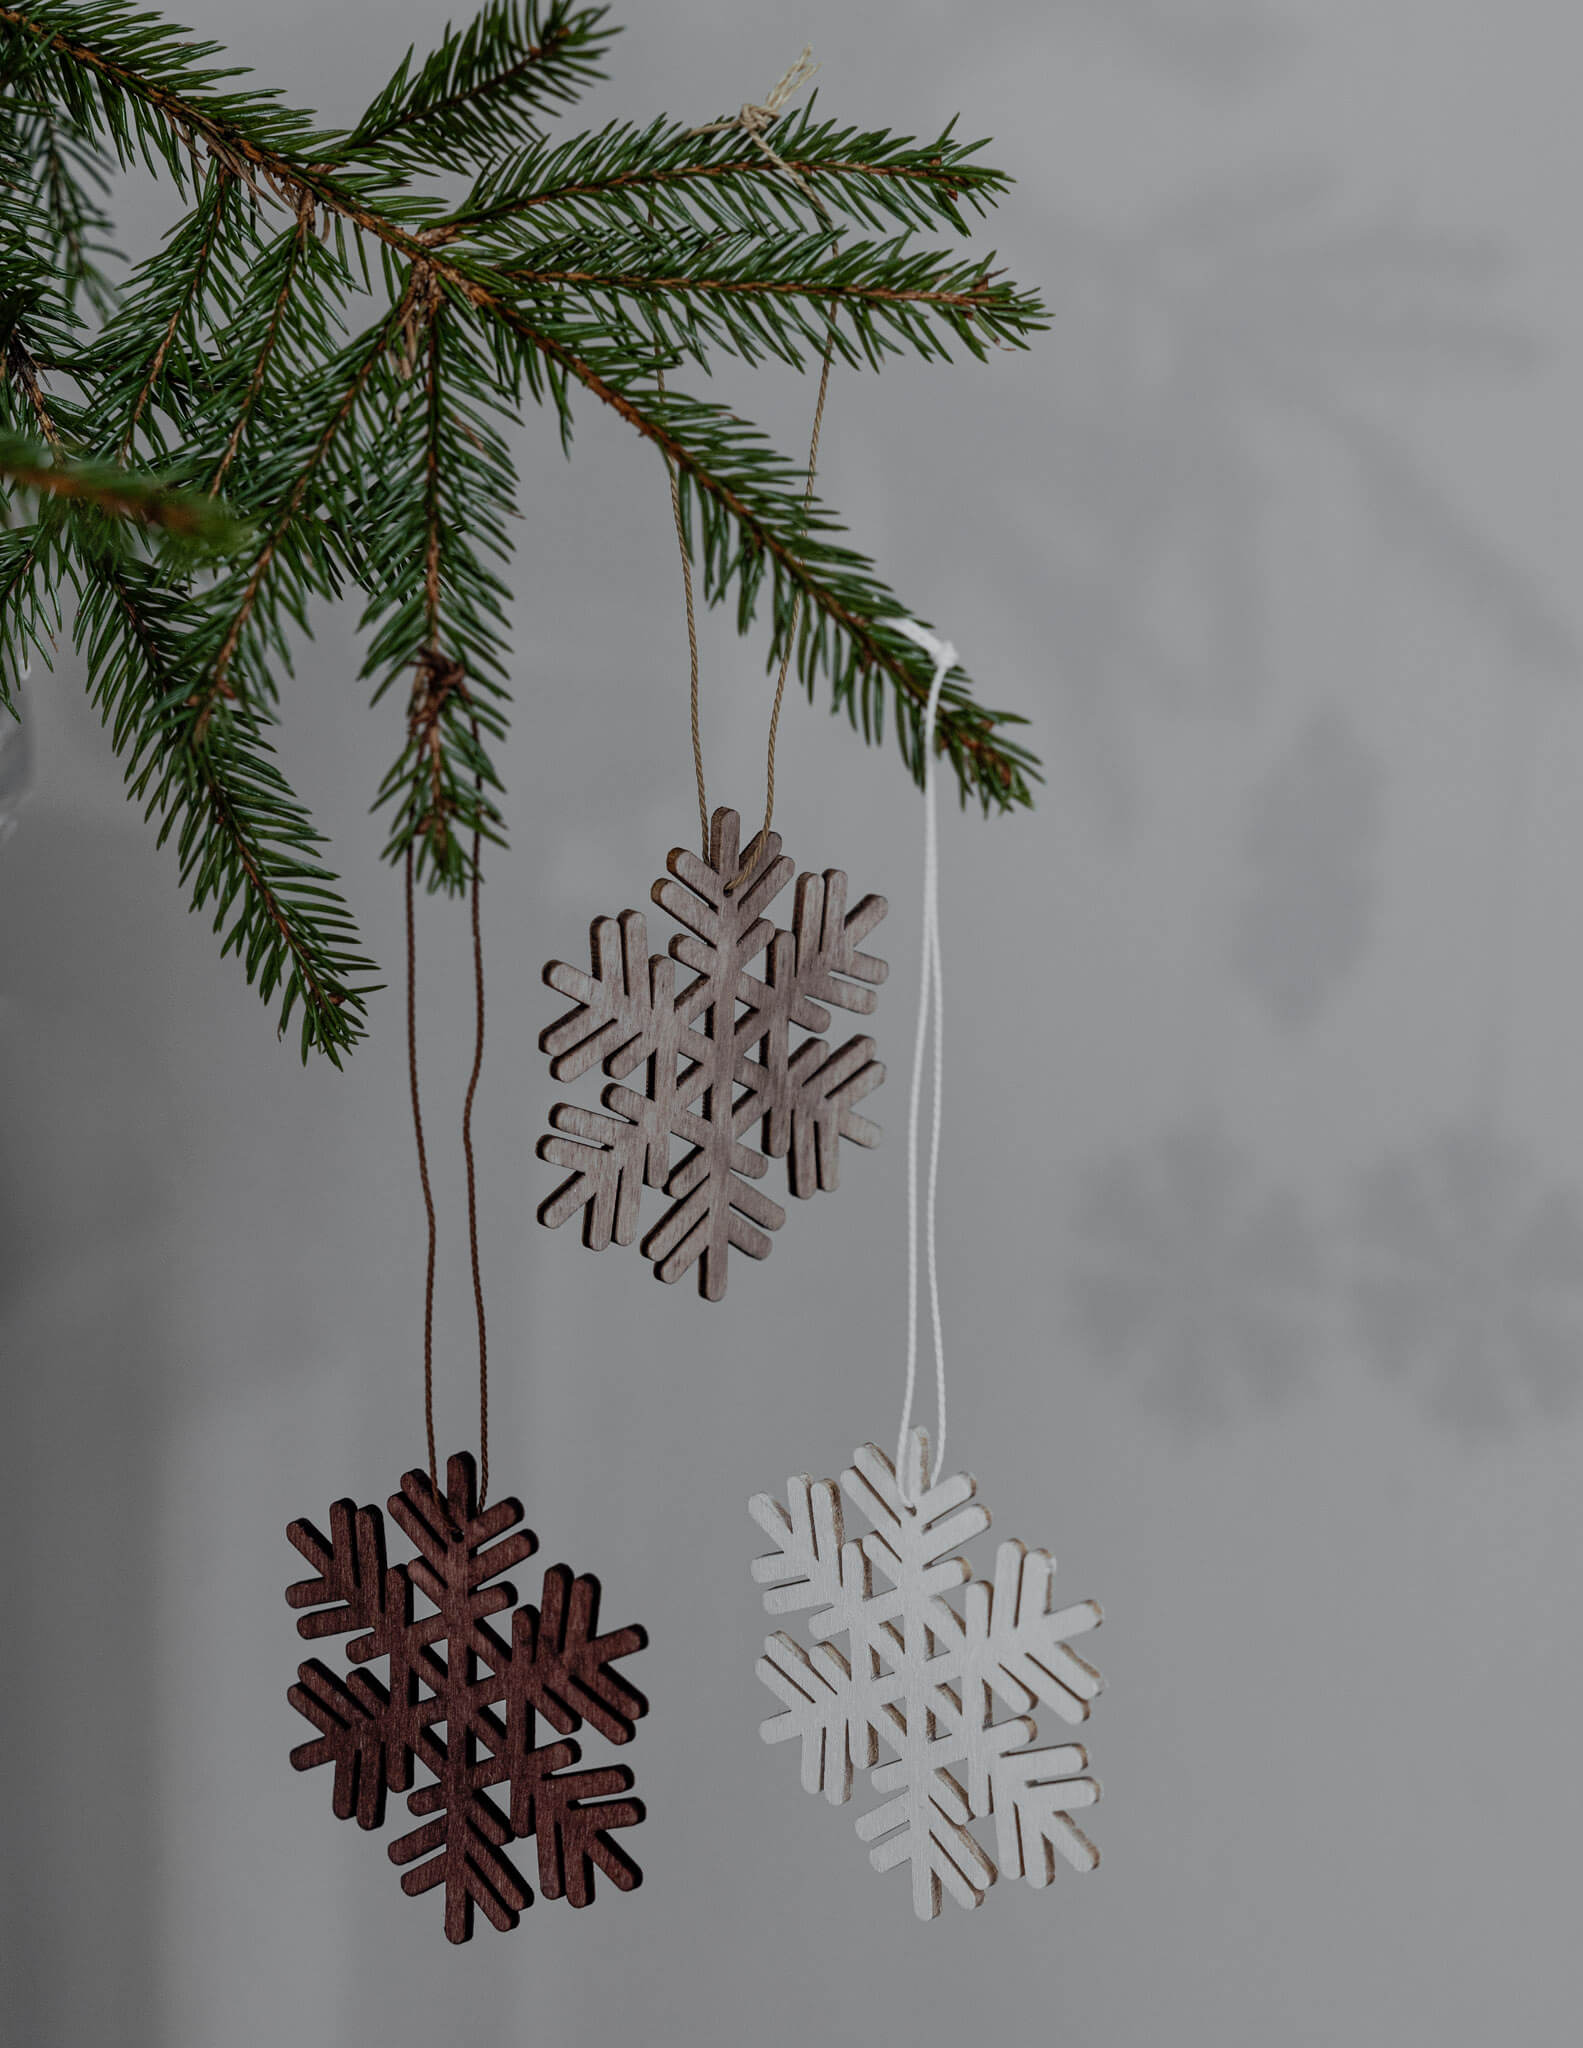 Alseda Snowflake Decoration | White | by Storefactory - Lifestory